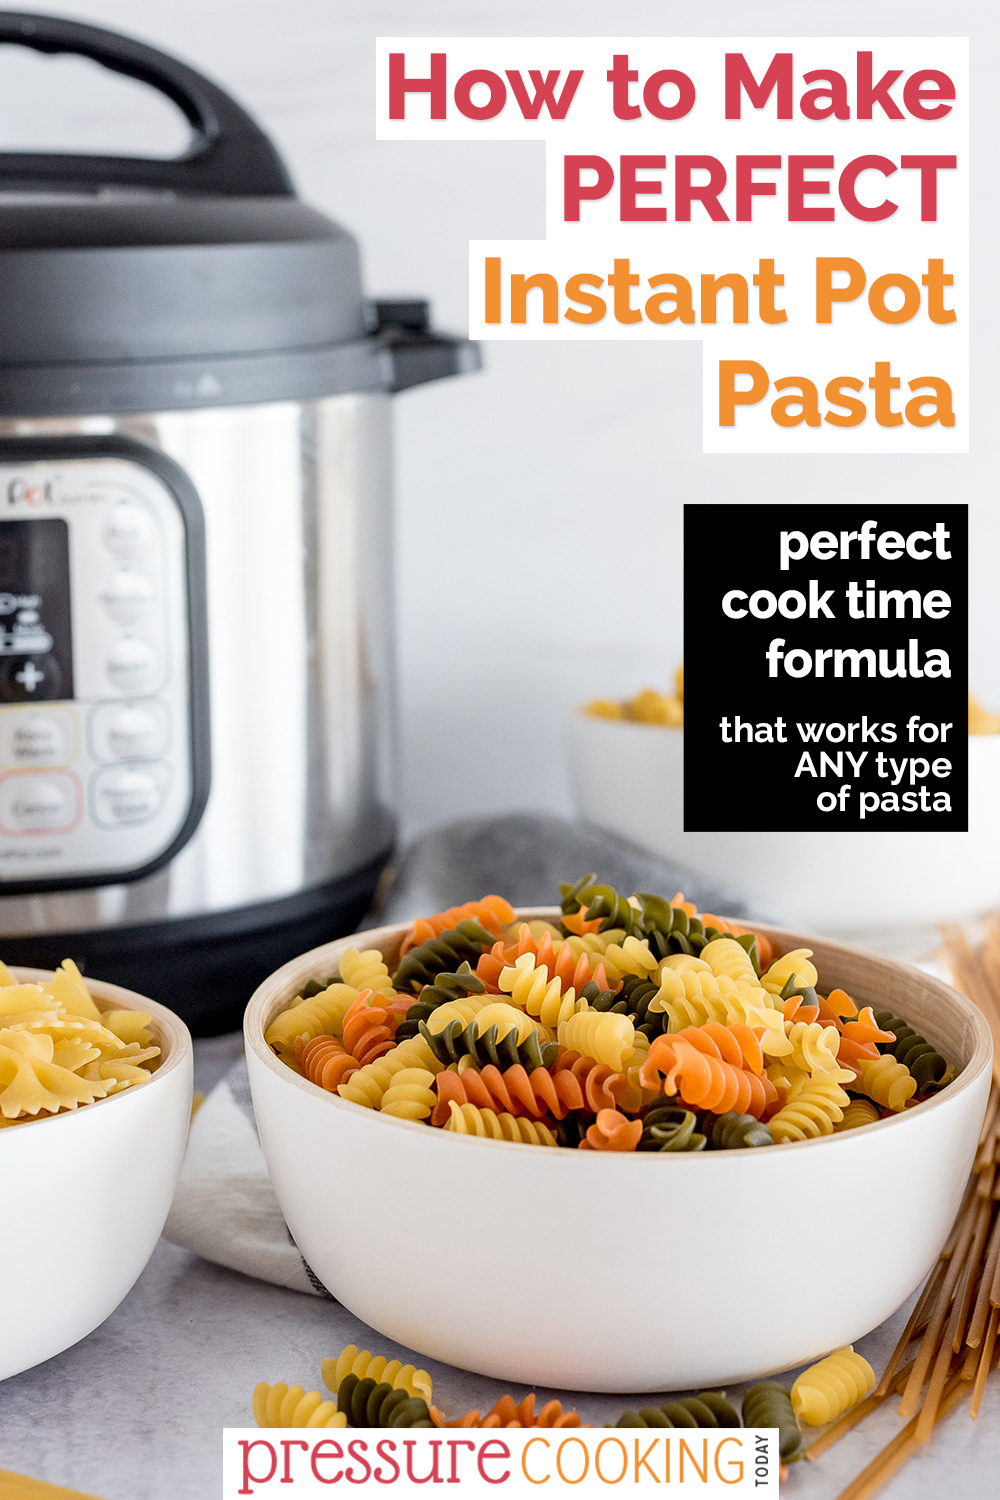 Pinterest button that reads "How to Make PERFECT Instant Pot Pasta" via @PressureCook2da